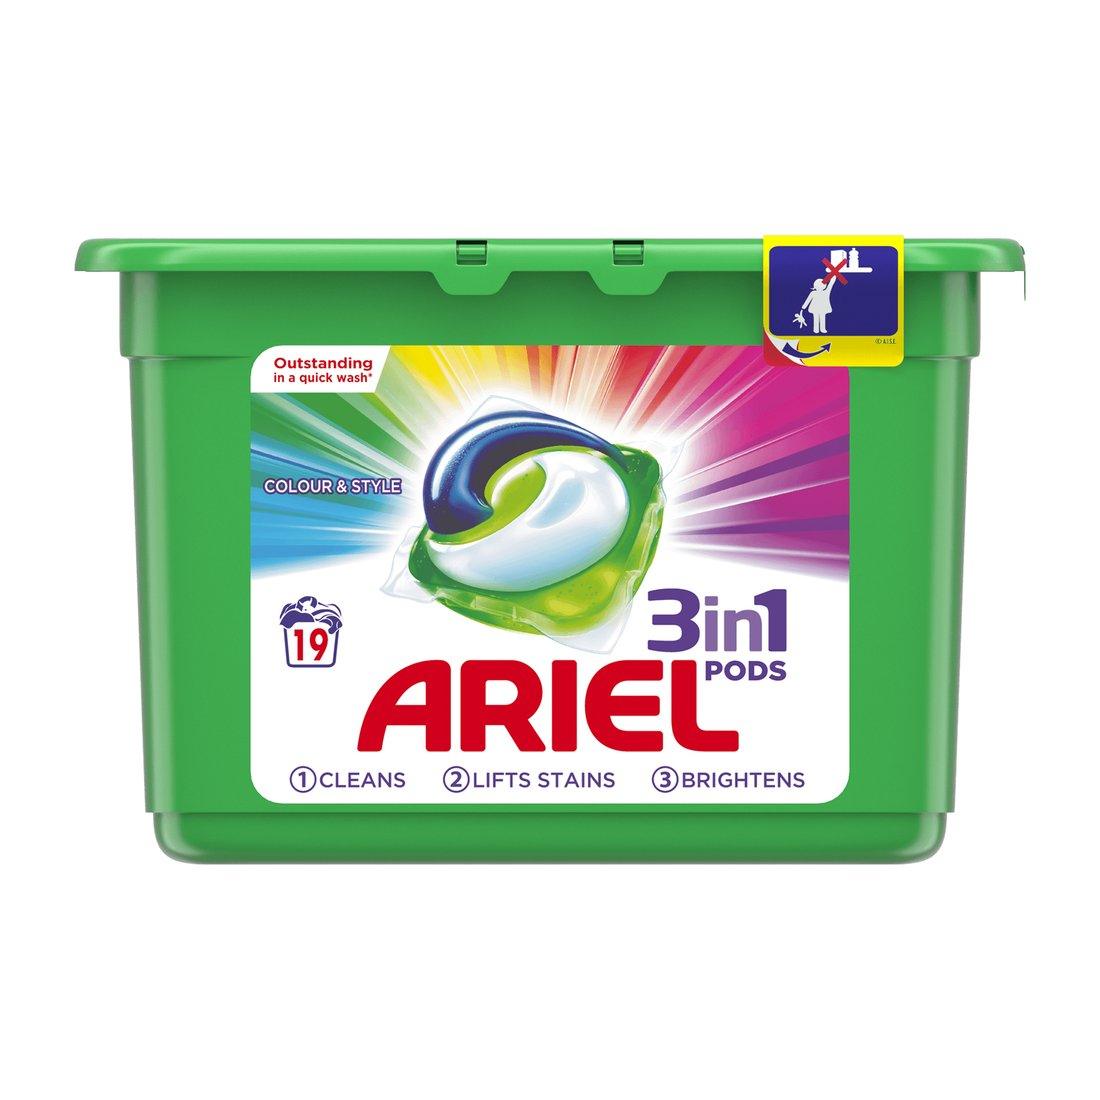 Ariel 3in1 Pods - Colour (19w) - Vending Superstore